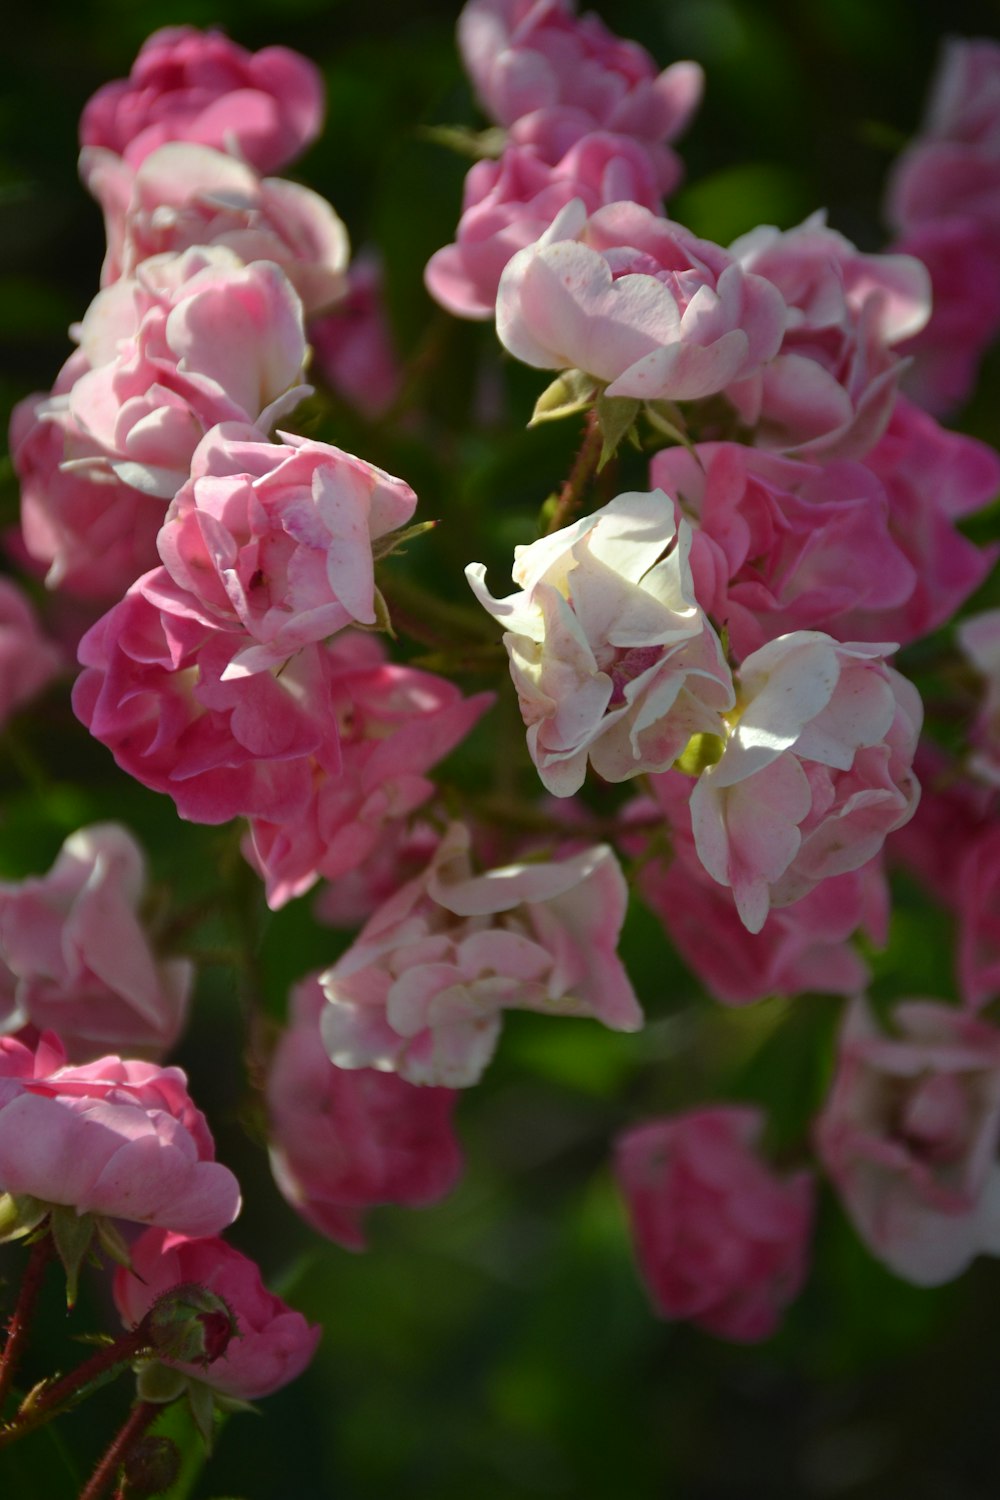 flores rosa e branco na lente tilt shift